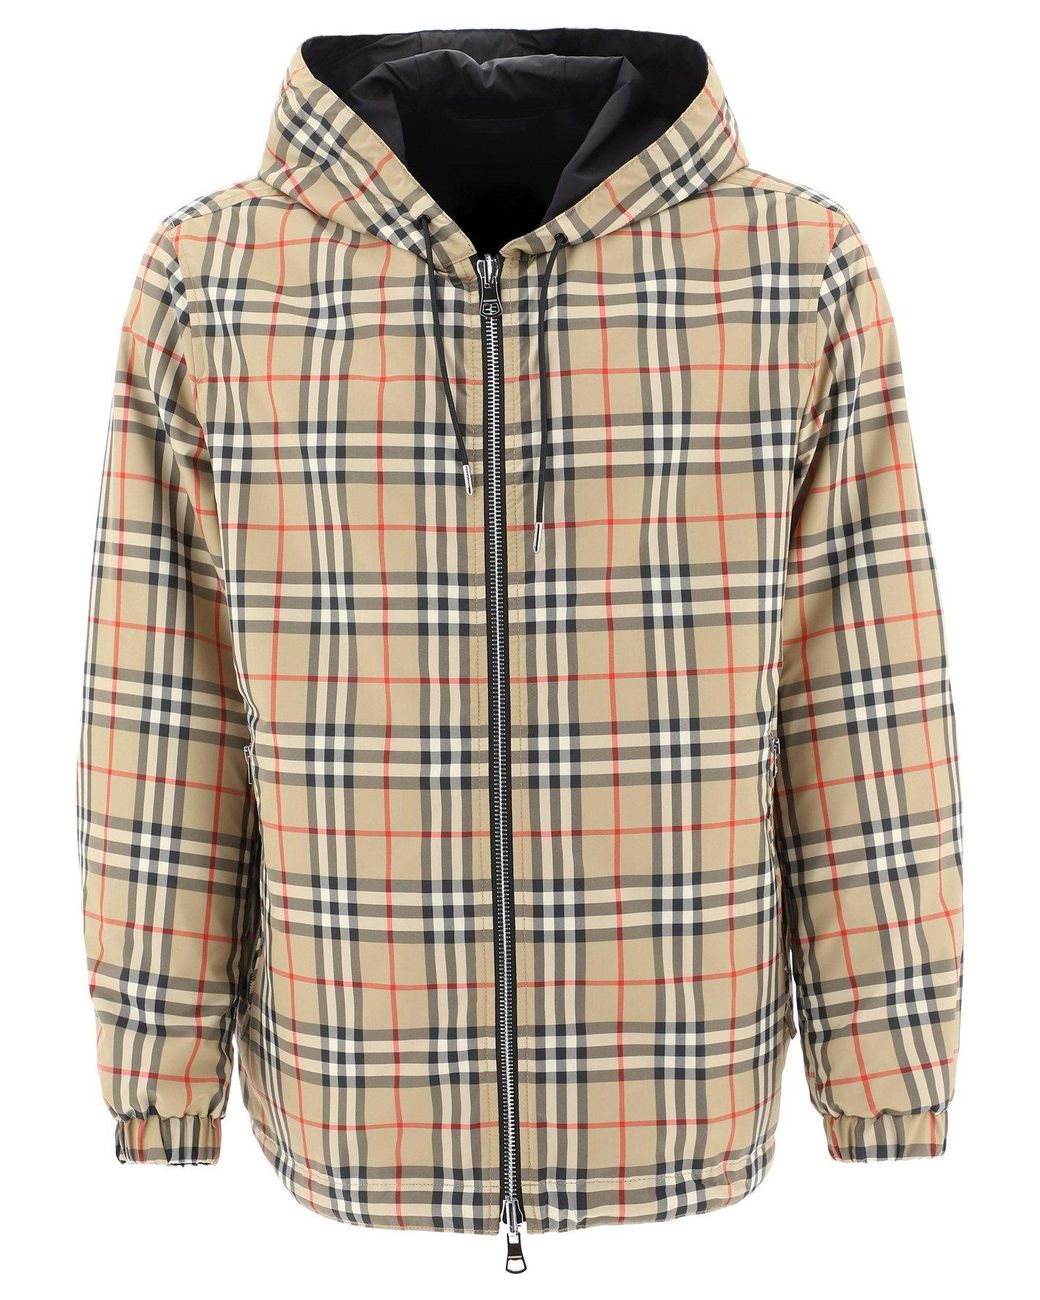 Burberry Vintage Check Reversible Jacket for Men - Save 17% - Lyst